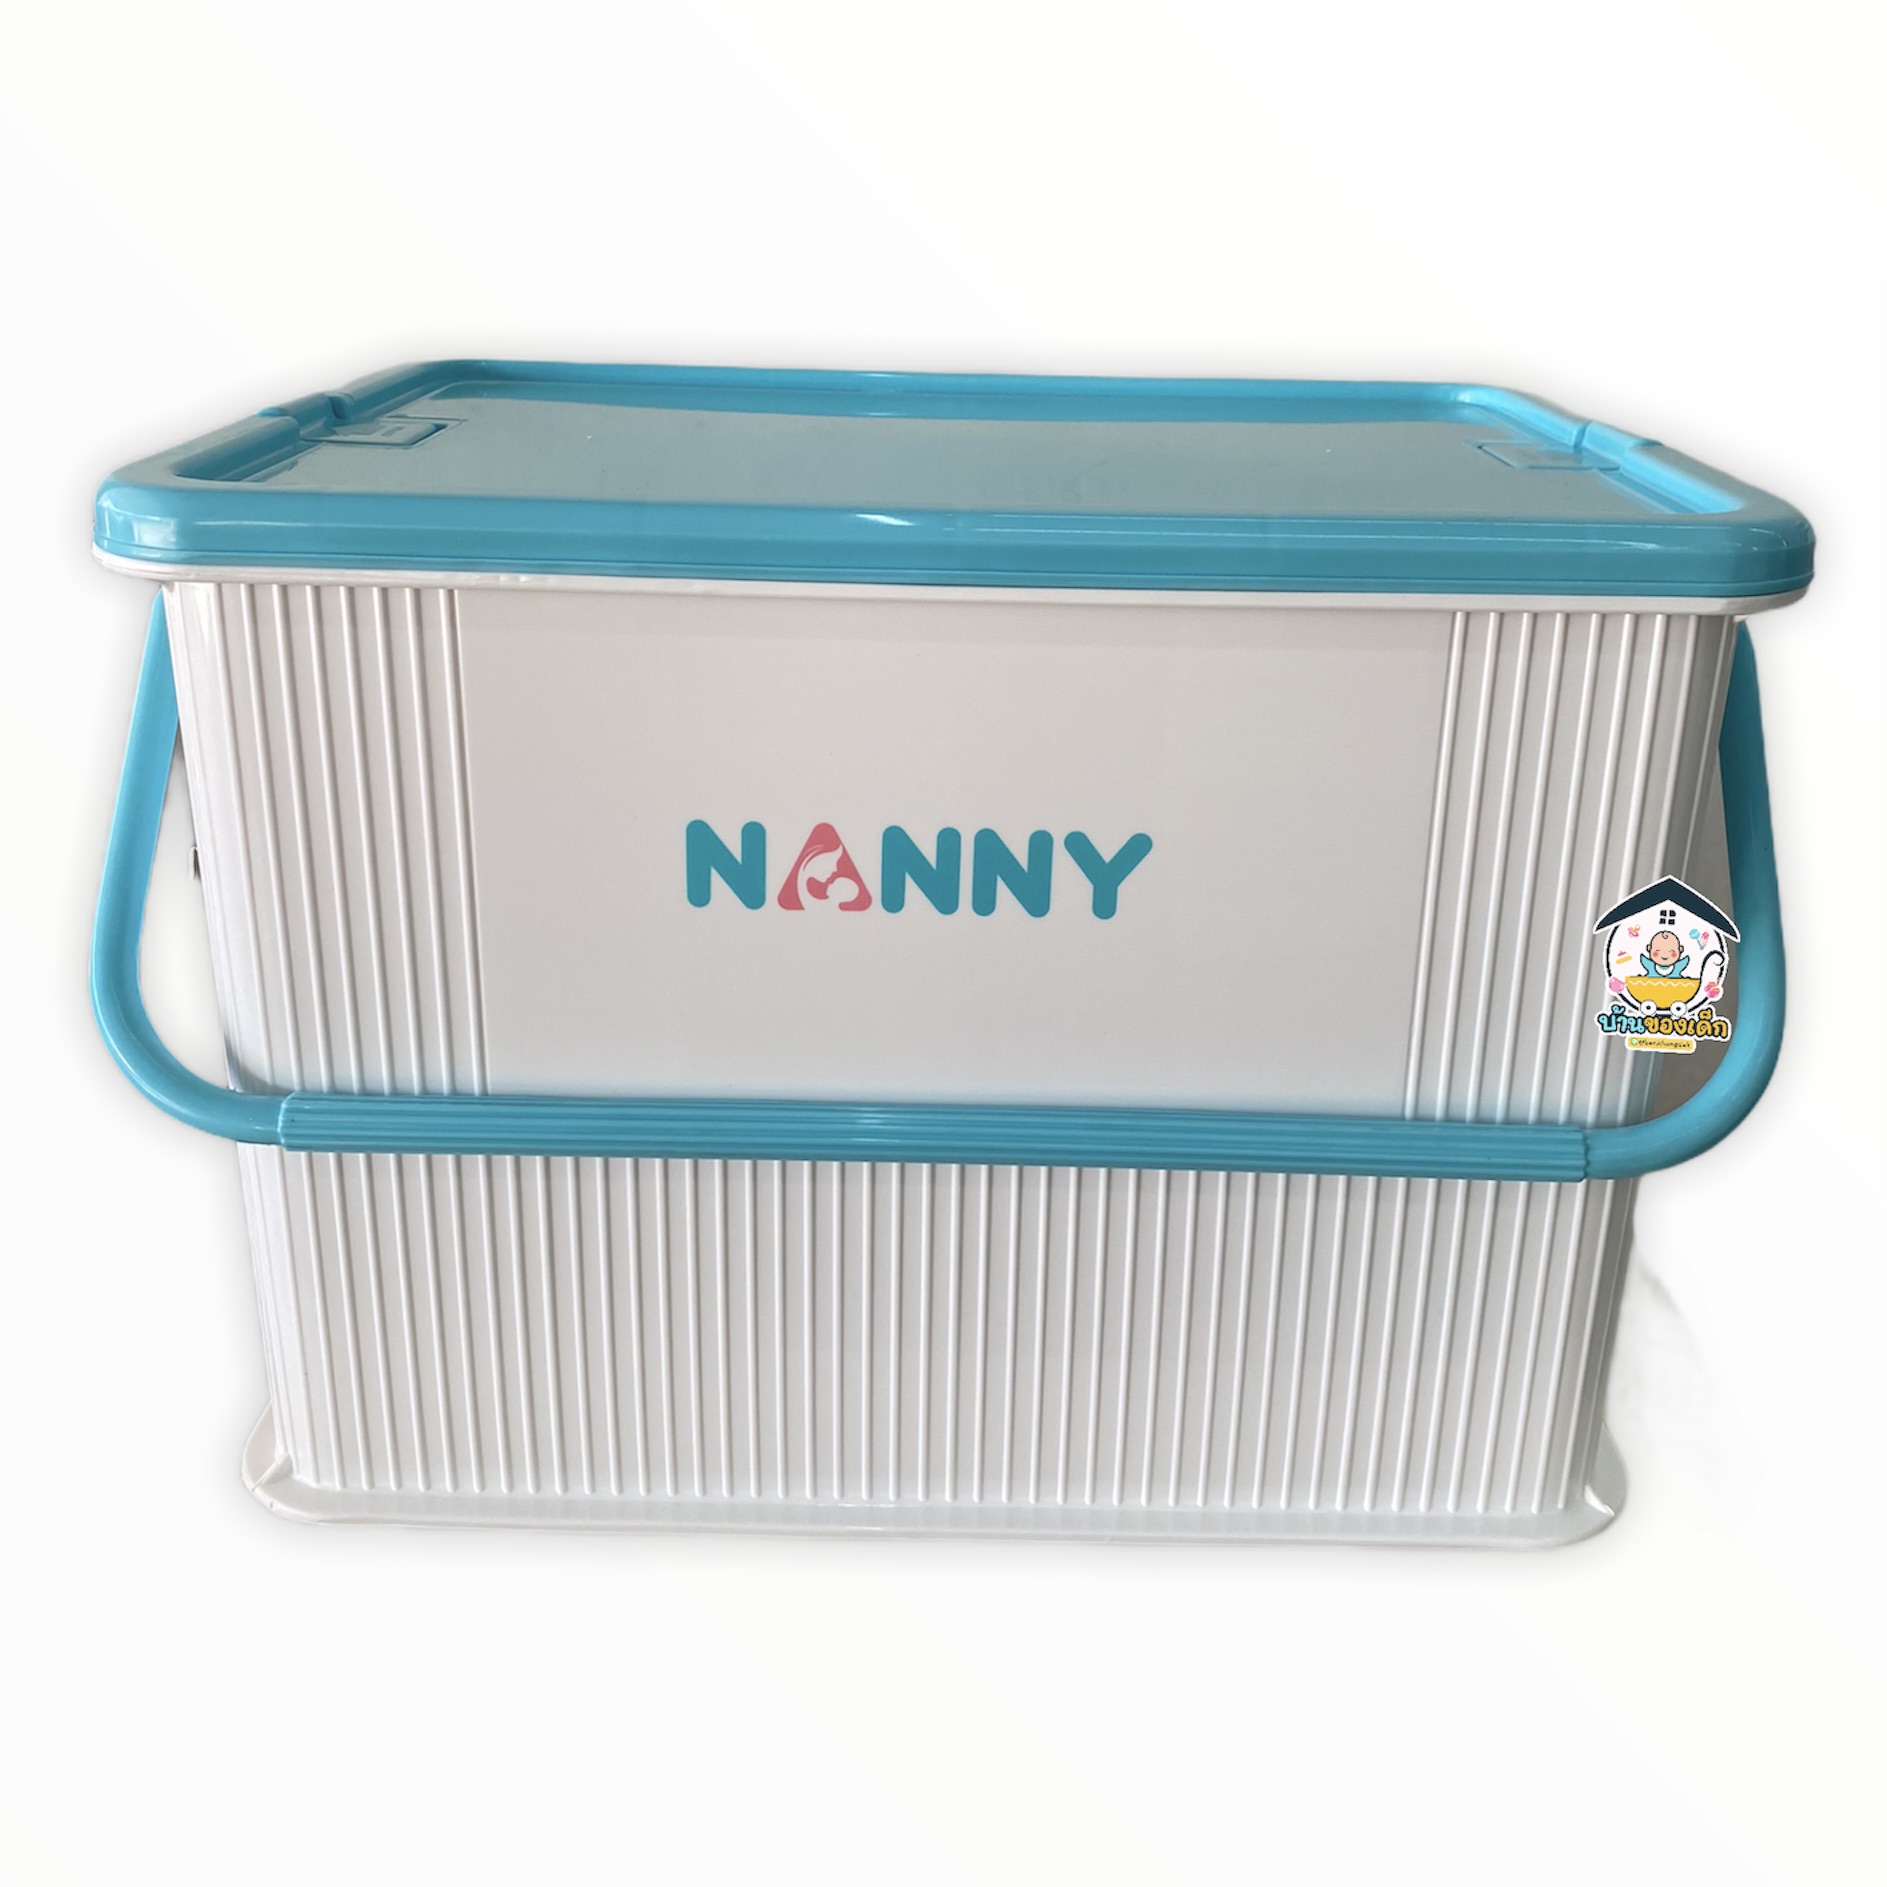 Nanny กล่องเก็บของอเนกประสงค์ ขนาดใหญ่ มีหูหิ้ว รุ่น N3040